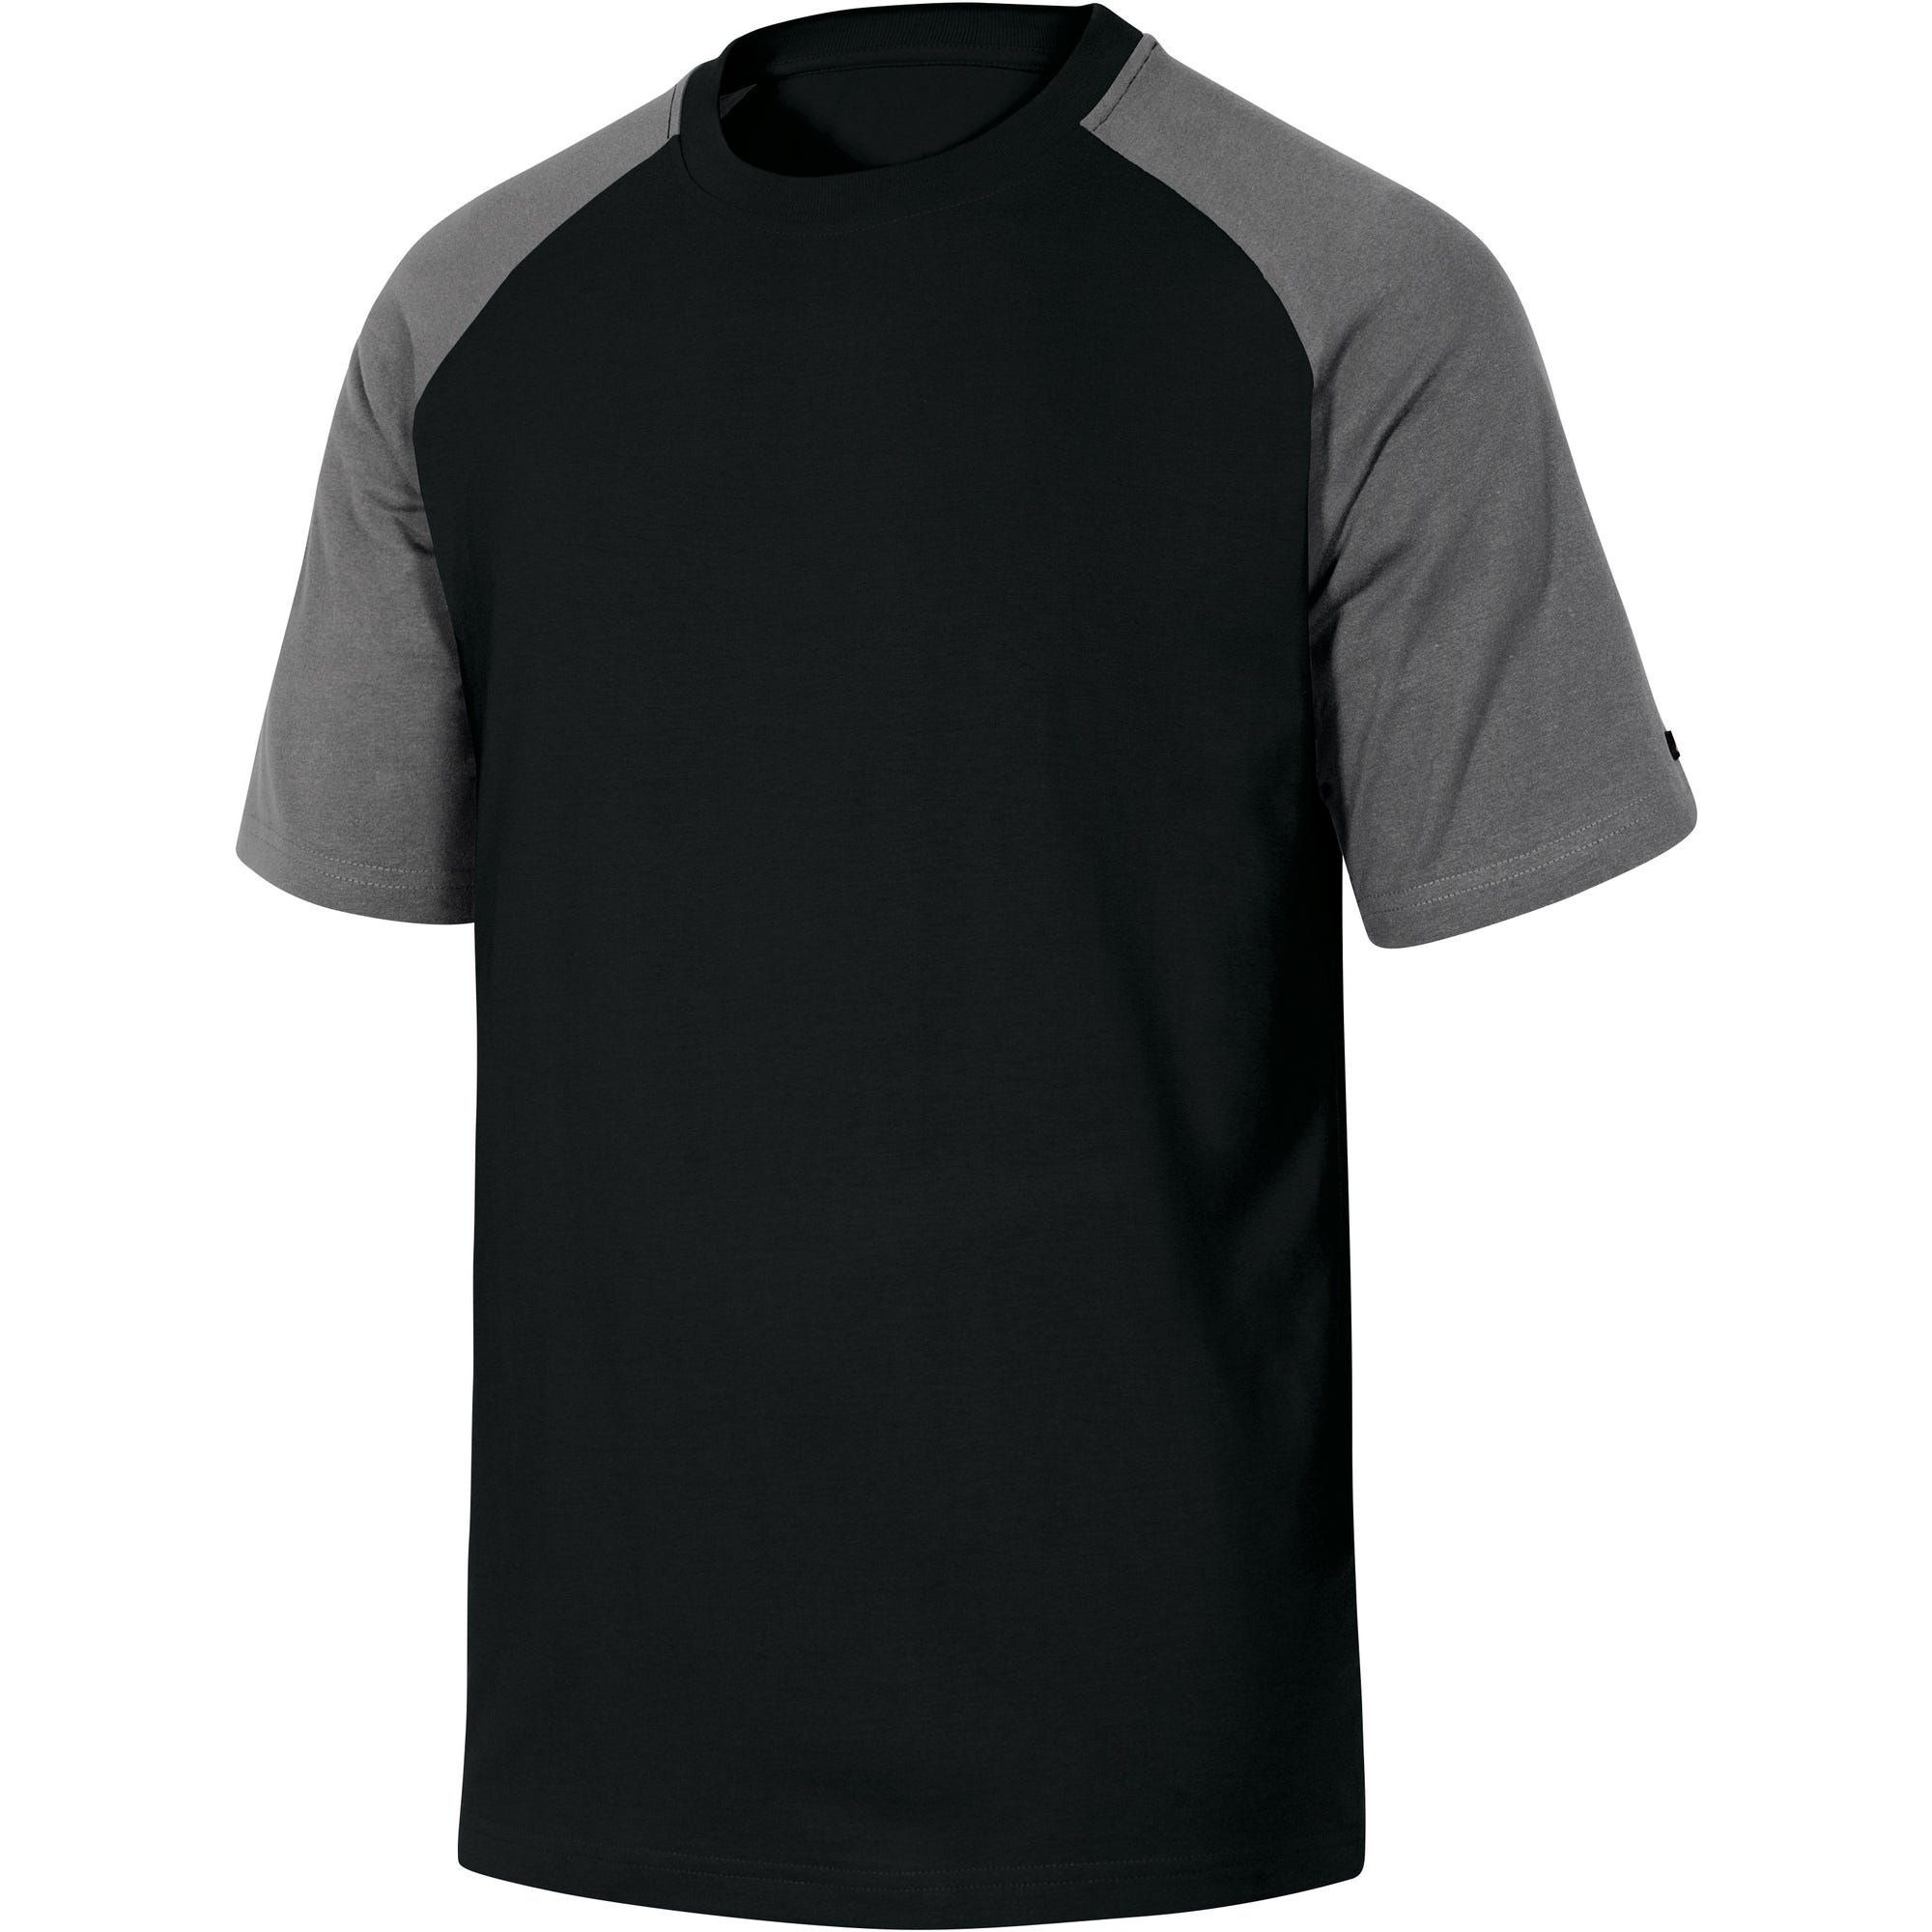 Tee-shirt noir / gris T.XL Mach Spring - DELTA PLUS 0